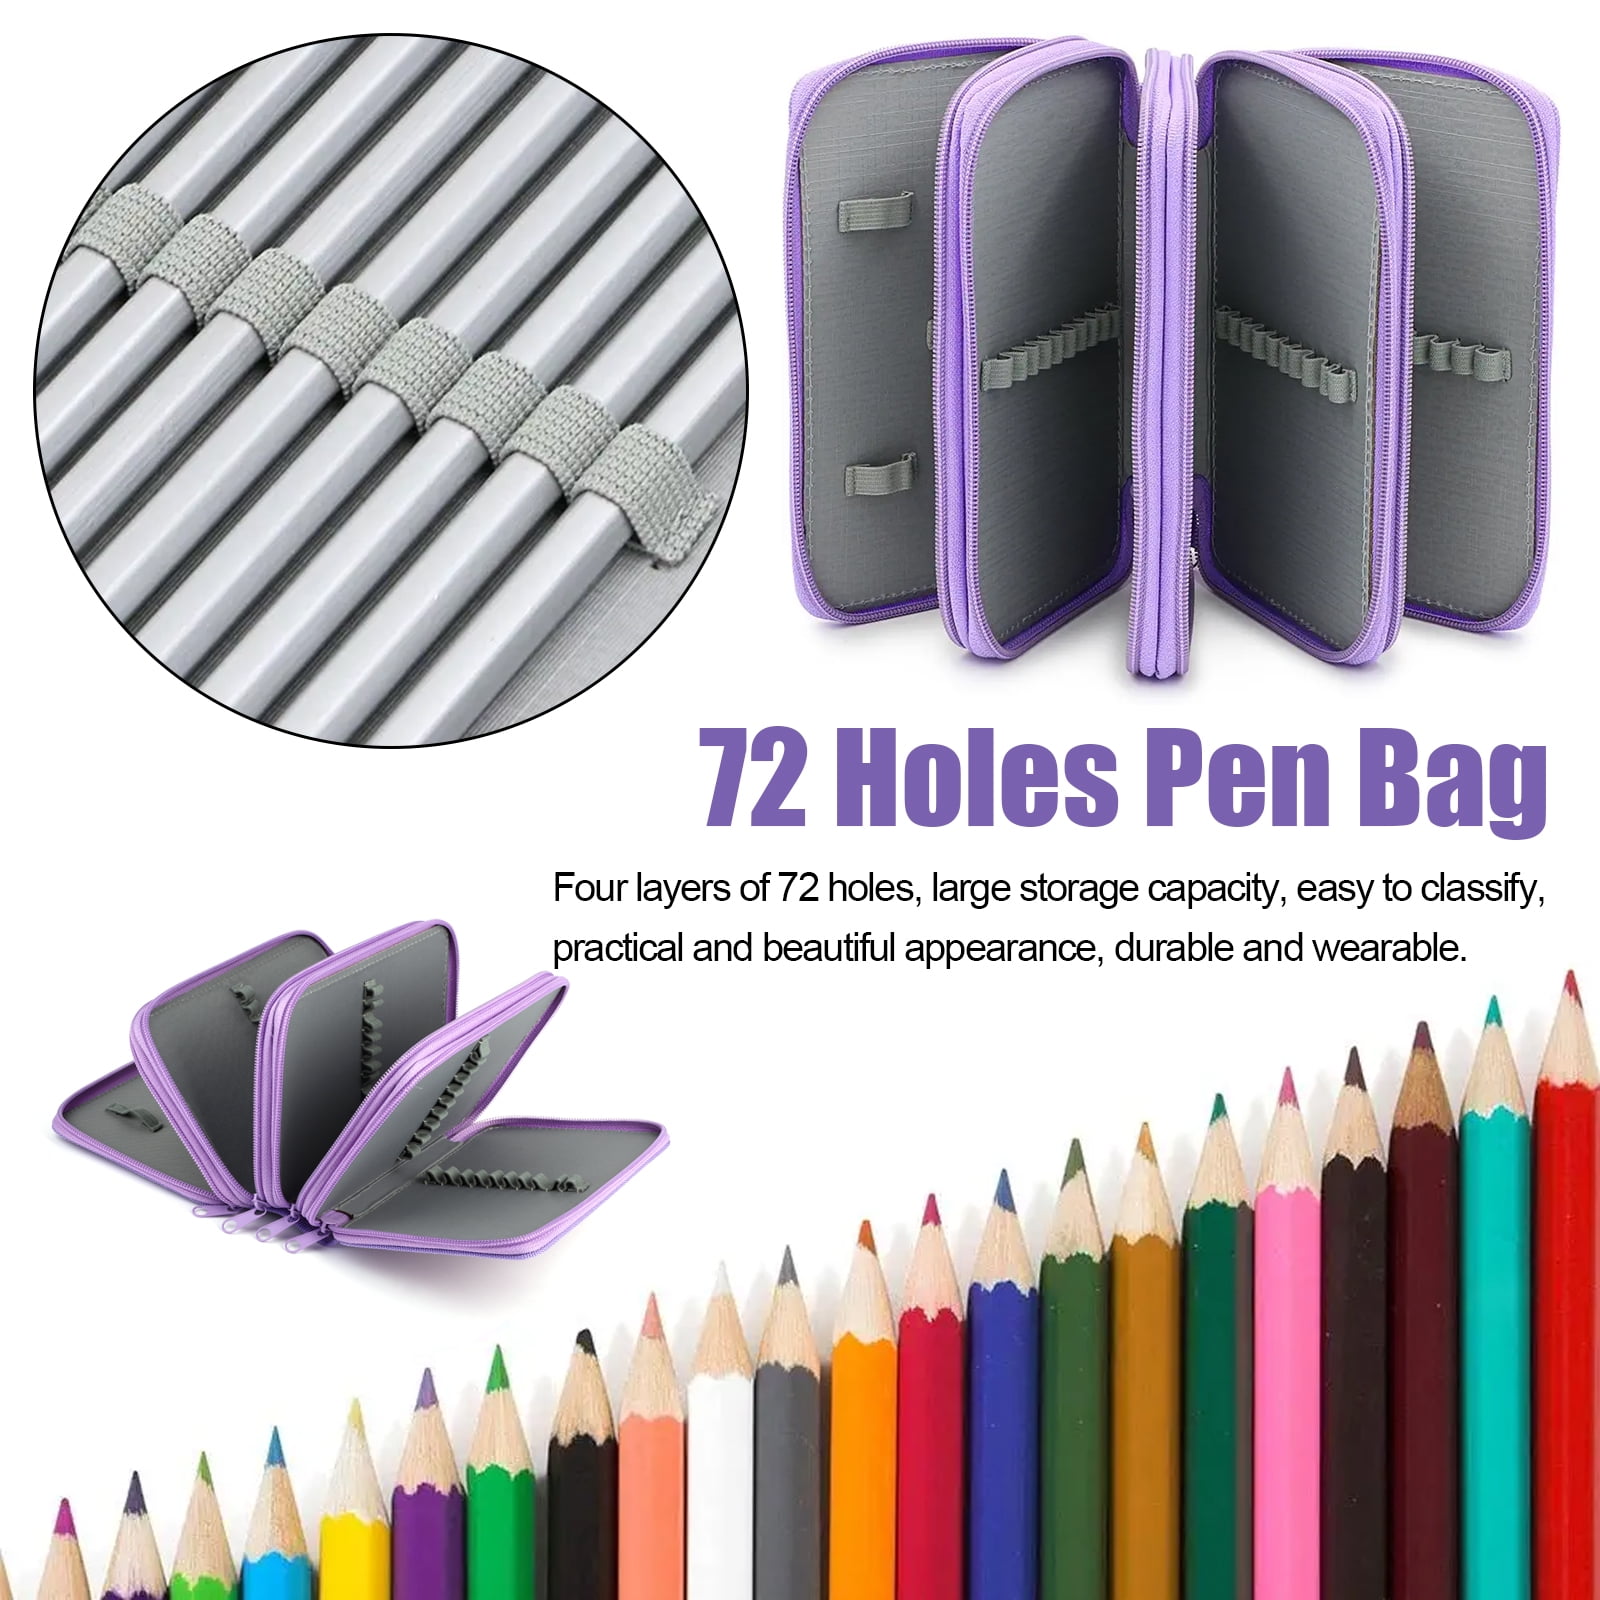 Colored Pencil Case 200 Slots Pen Pencil Bag Organizer with Handle Strap  Portable- Multilayer Holder for Colored Pencils & Gel Pen - Blue 